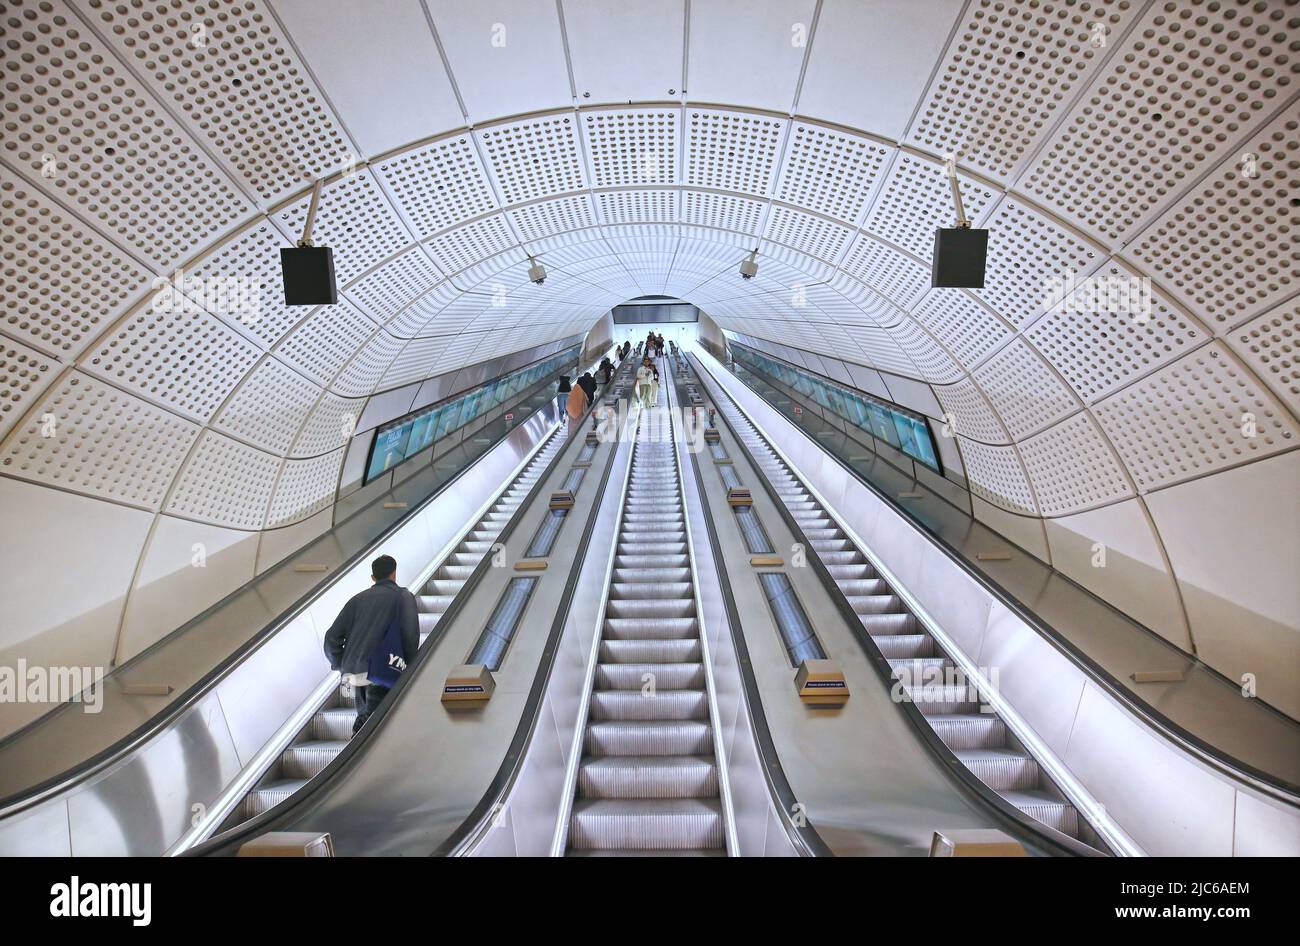 London, UK.  Main escalator shaft at the new Elizabeth Line (Crossrail) station at Whitechapel, east London. Shows curved concrete cladding panels Stock Photo